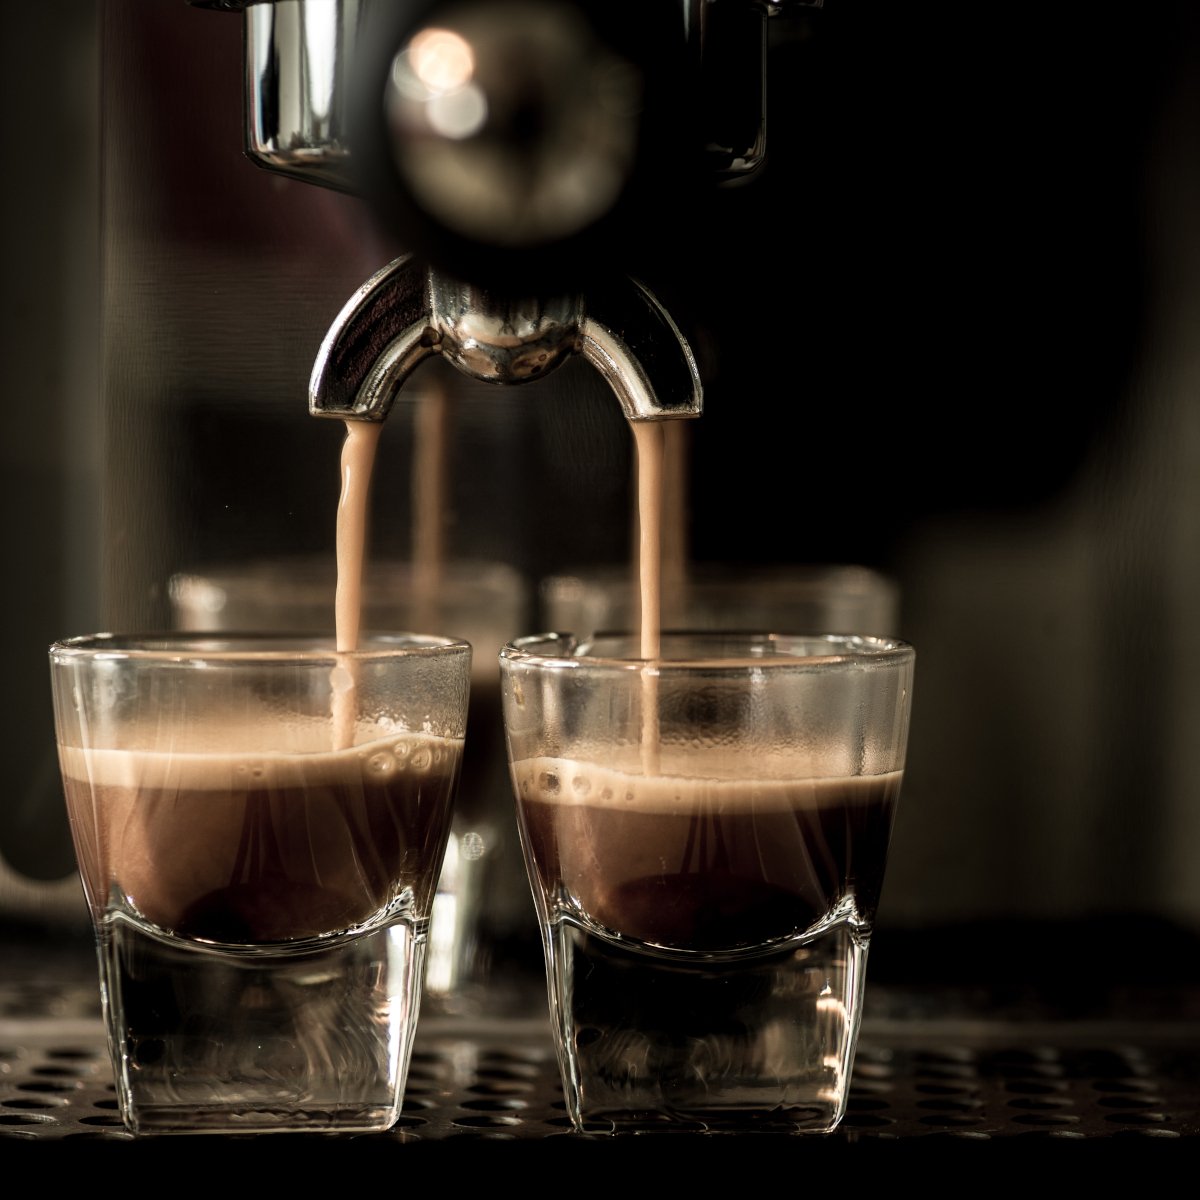 espresso-machine-brewing-two-shots-of-espresso